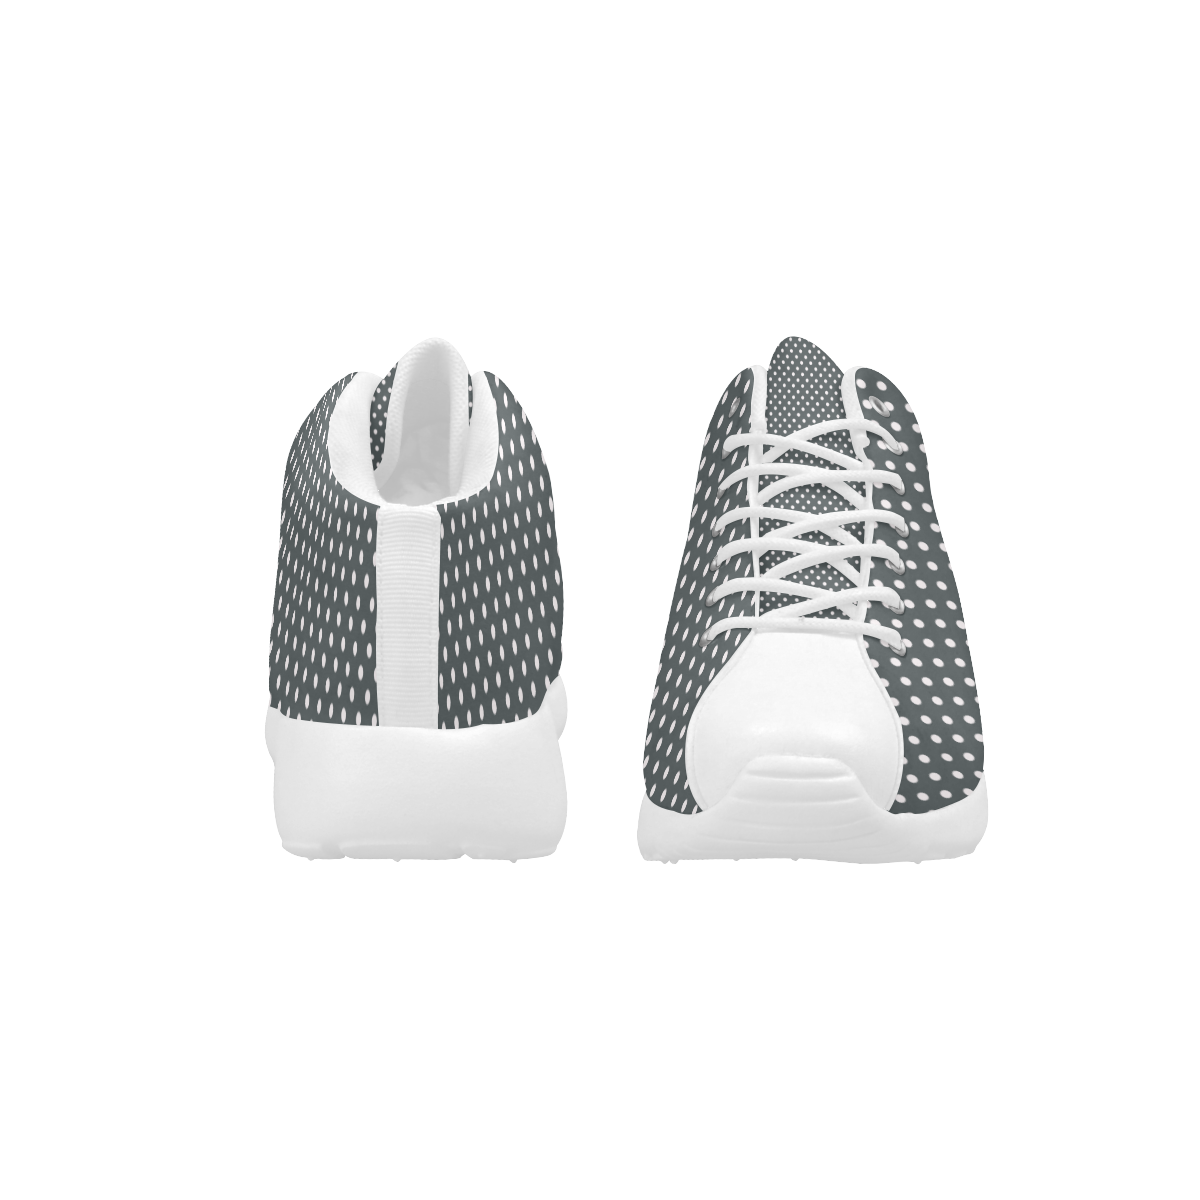 Silver polka dots Women's Basketball Training Shoes (Model 47502)